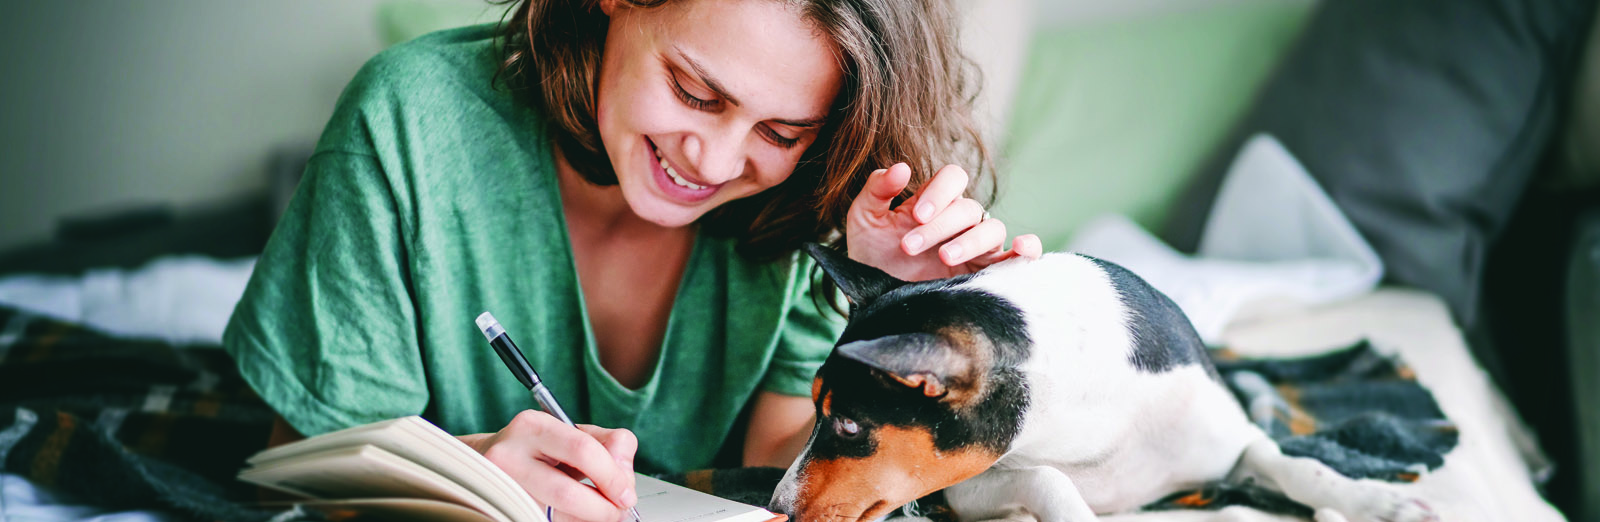 woman-writing-with-dog-1600x522.jpg